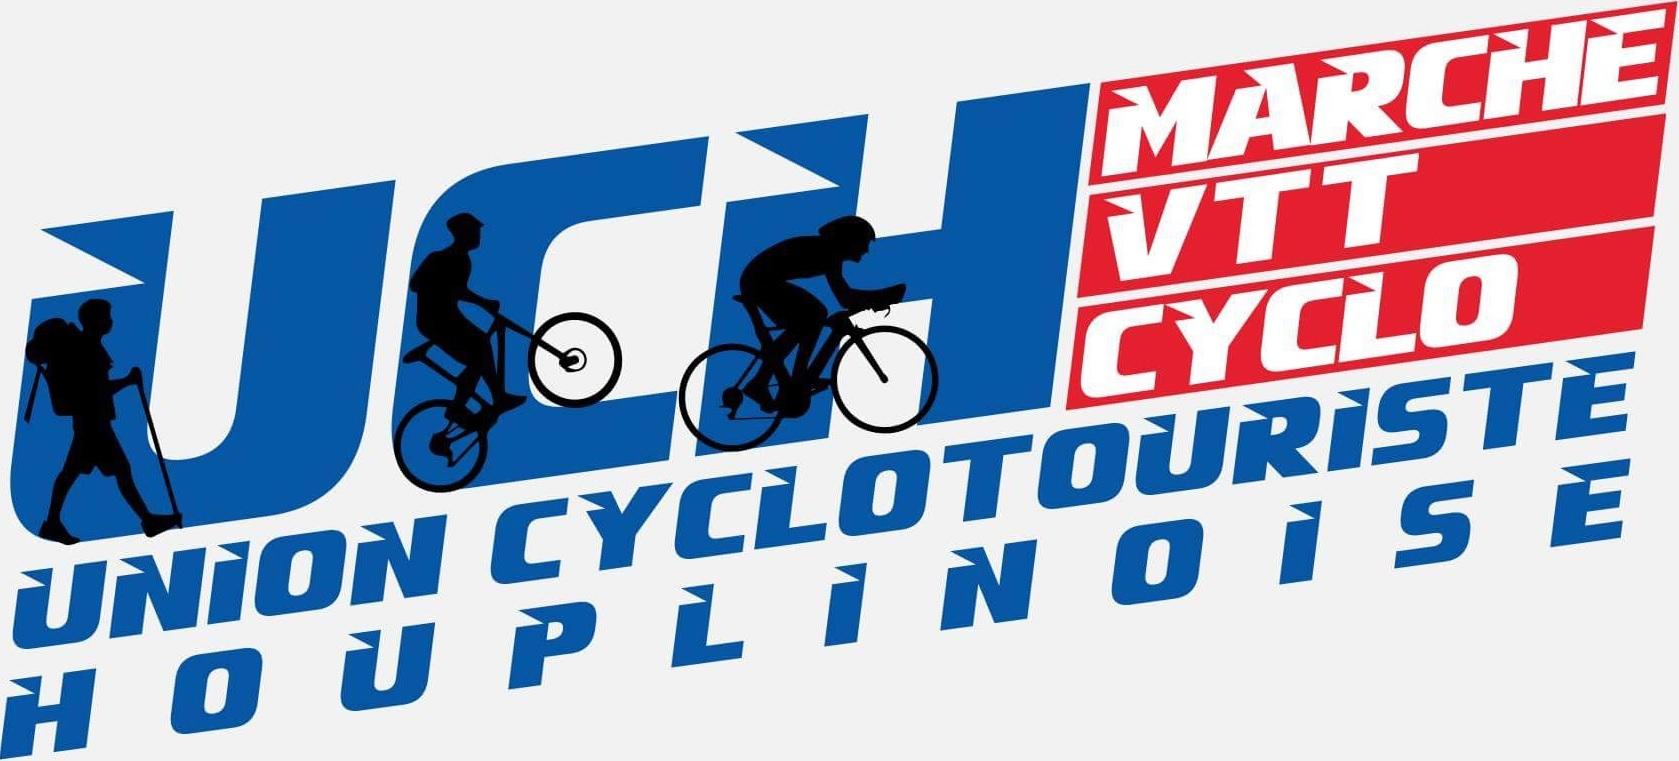 Logo uch marche vtt cyclo reduit 1